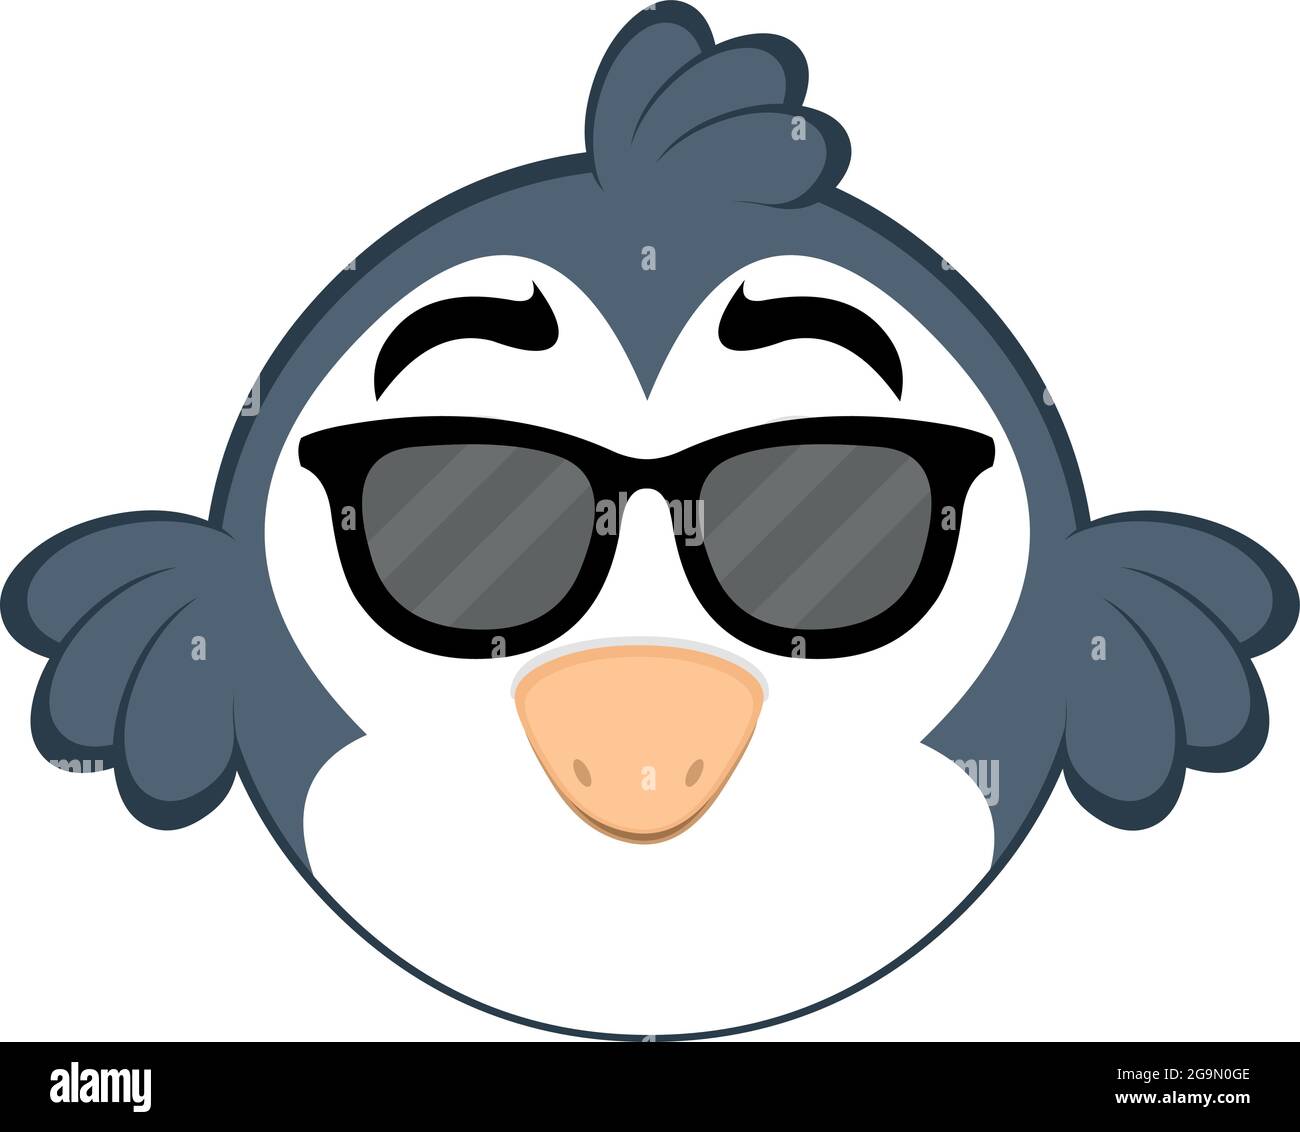 Vector emoticon illustration of a cartoon bird with sunglasses Stock Vector